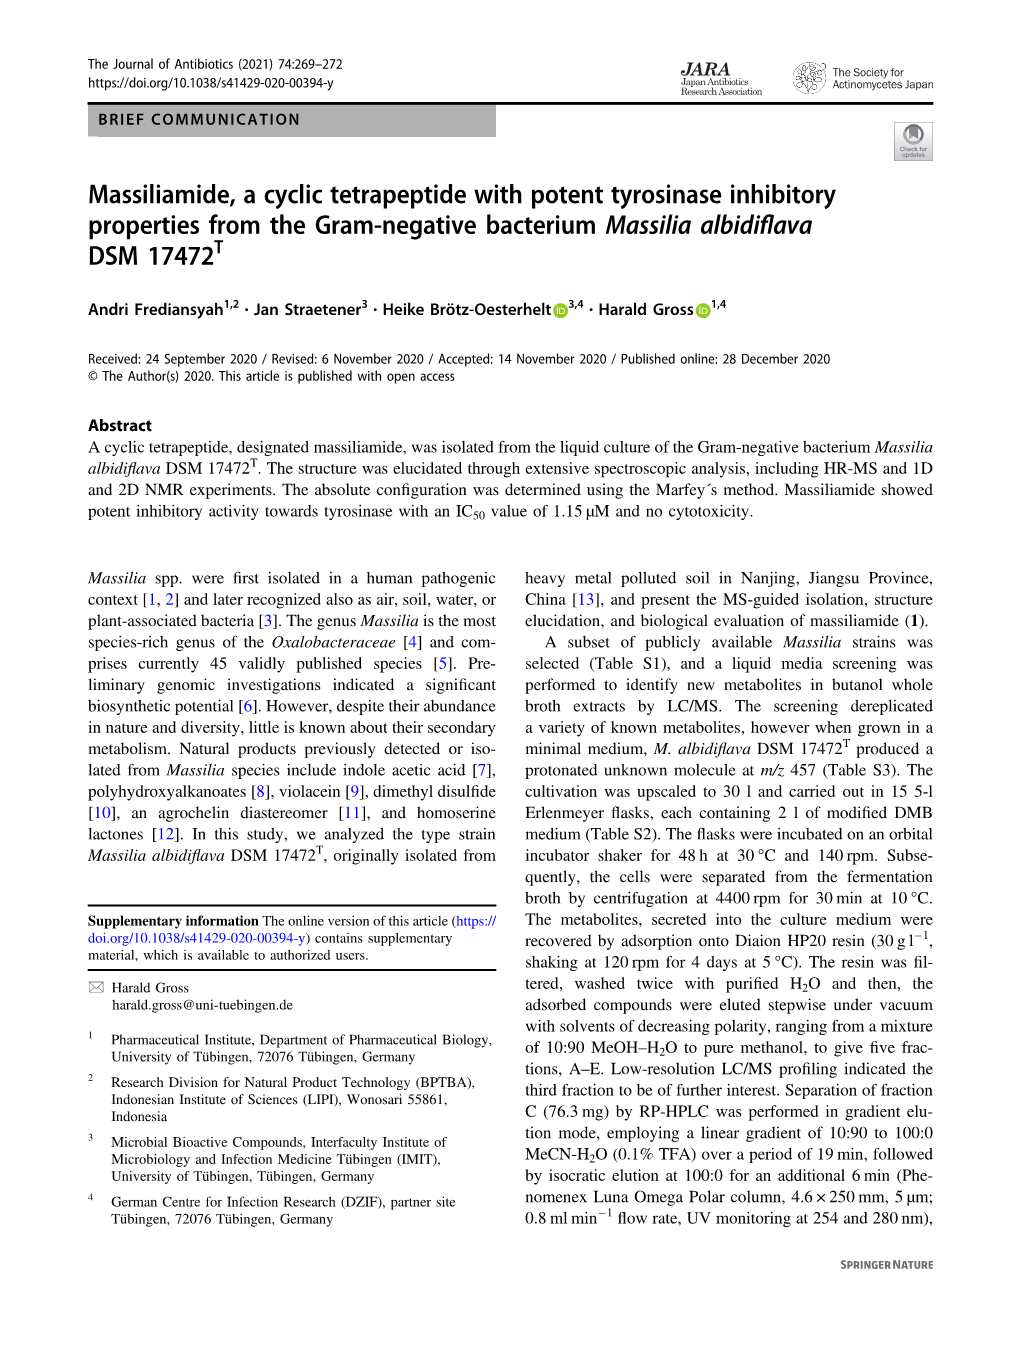 Massiliamide, a Cyclic Tetrapeptide with Potent Tyrosinase Inhibitory Properties from the Gram-Negative Bacterium Massilia Albidiﬂava DSM 17472T